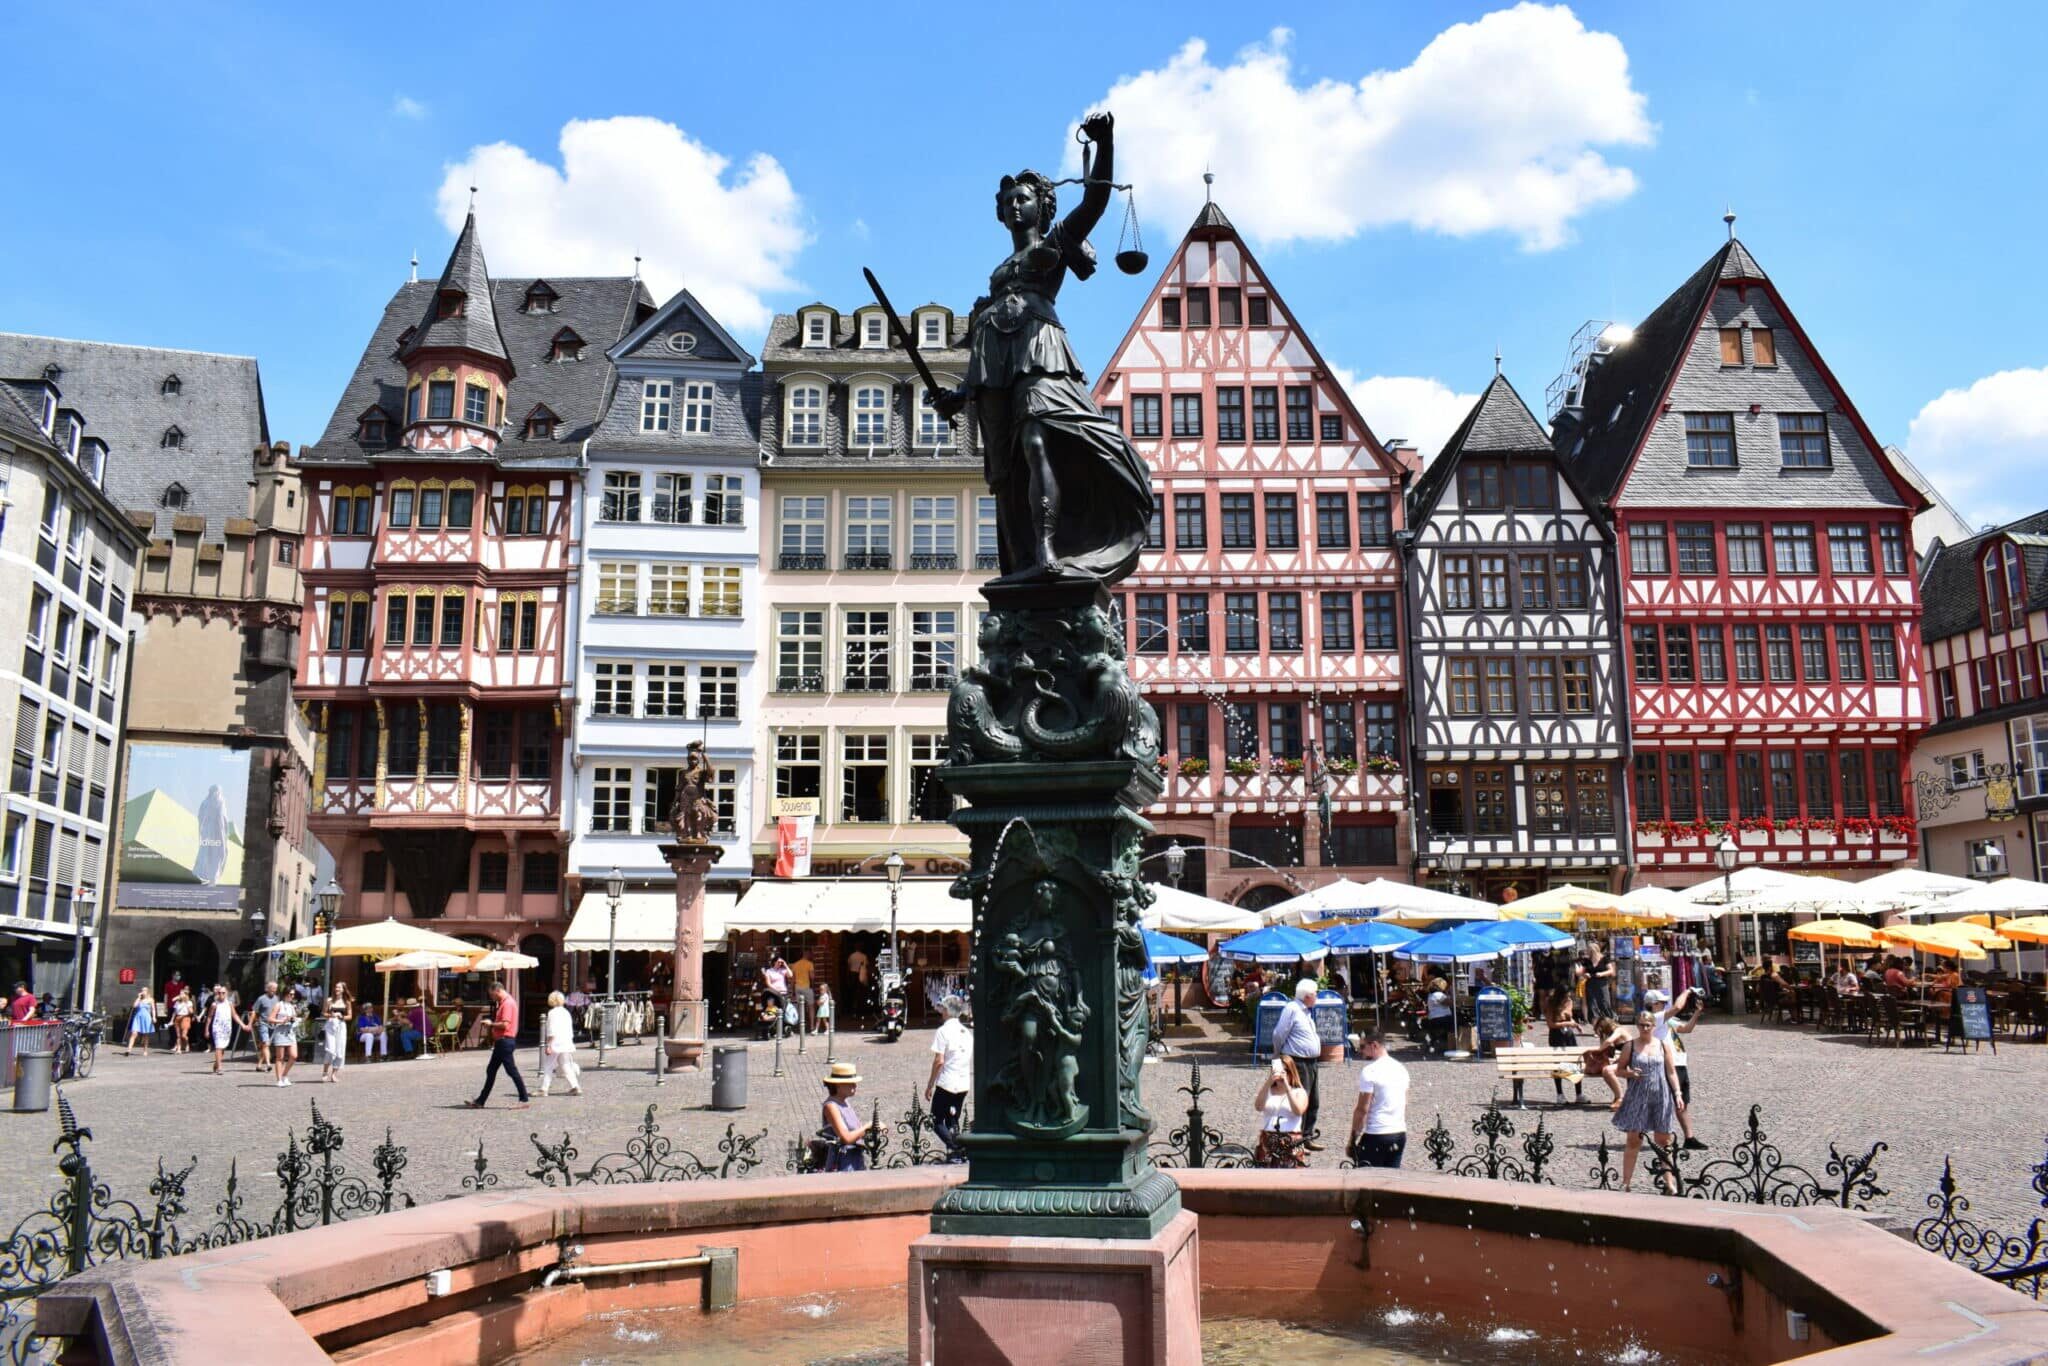 Citytrip Frankfurt – the German “Mainhattan”